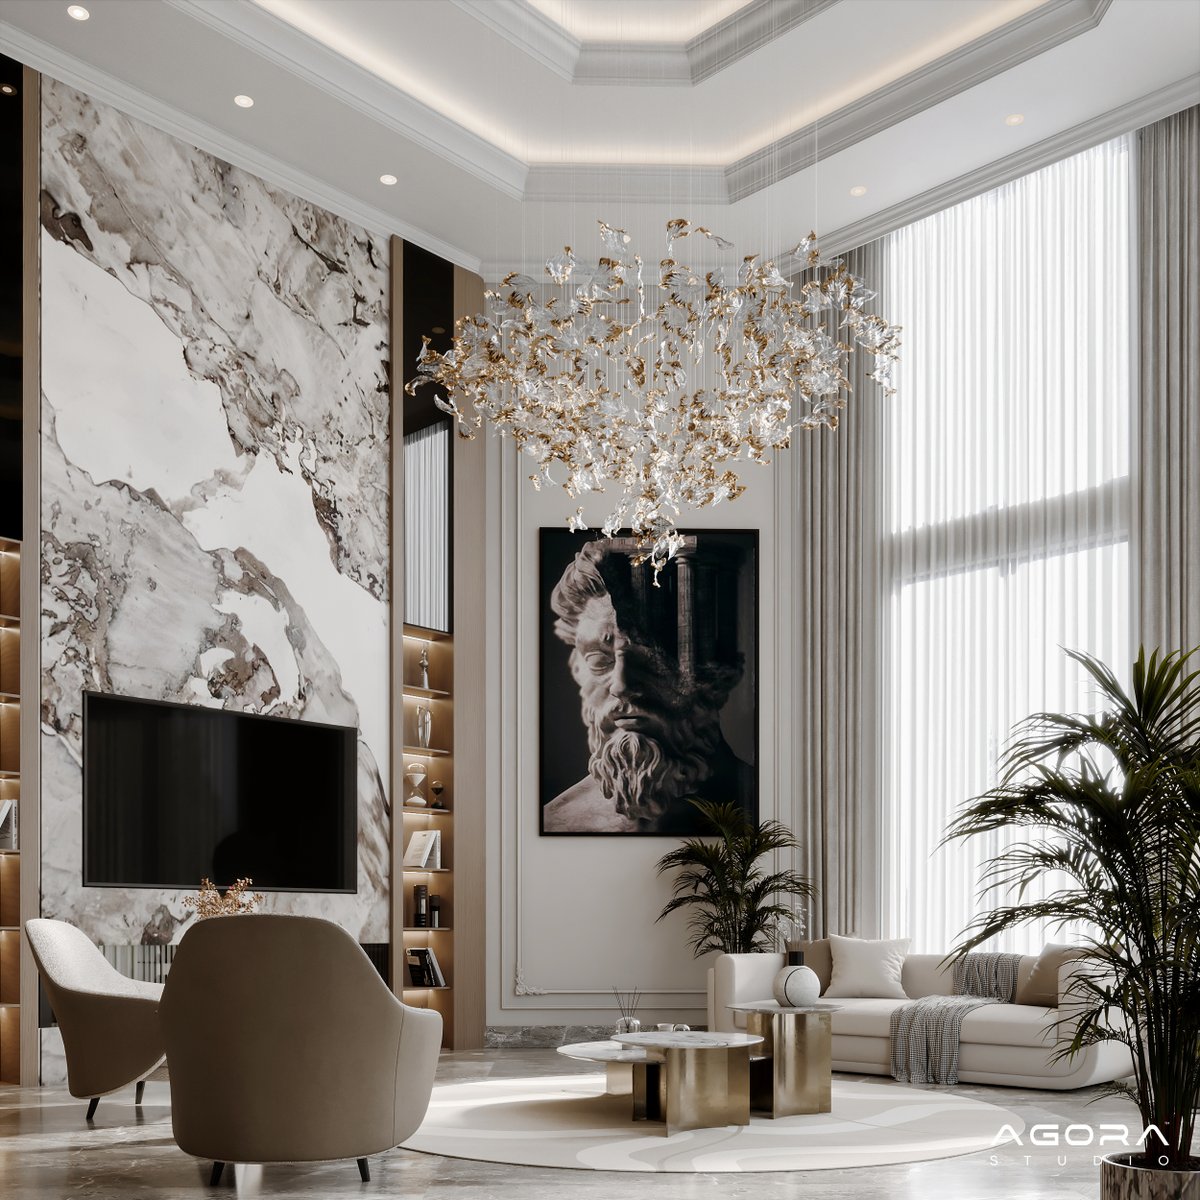 SIGNATURE ELEGANCE✨
Full project 👉 psee.io/5pbbjg

#interiordesign #interiordesigner #interiordesignideas #interiorstyling #interiors #interiordecor #interiordecorating #interiorinspiration #luxury #luxurylifestyle #luxuryhomes #visualization #saudiarabia